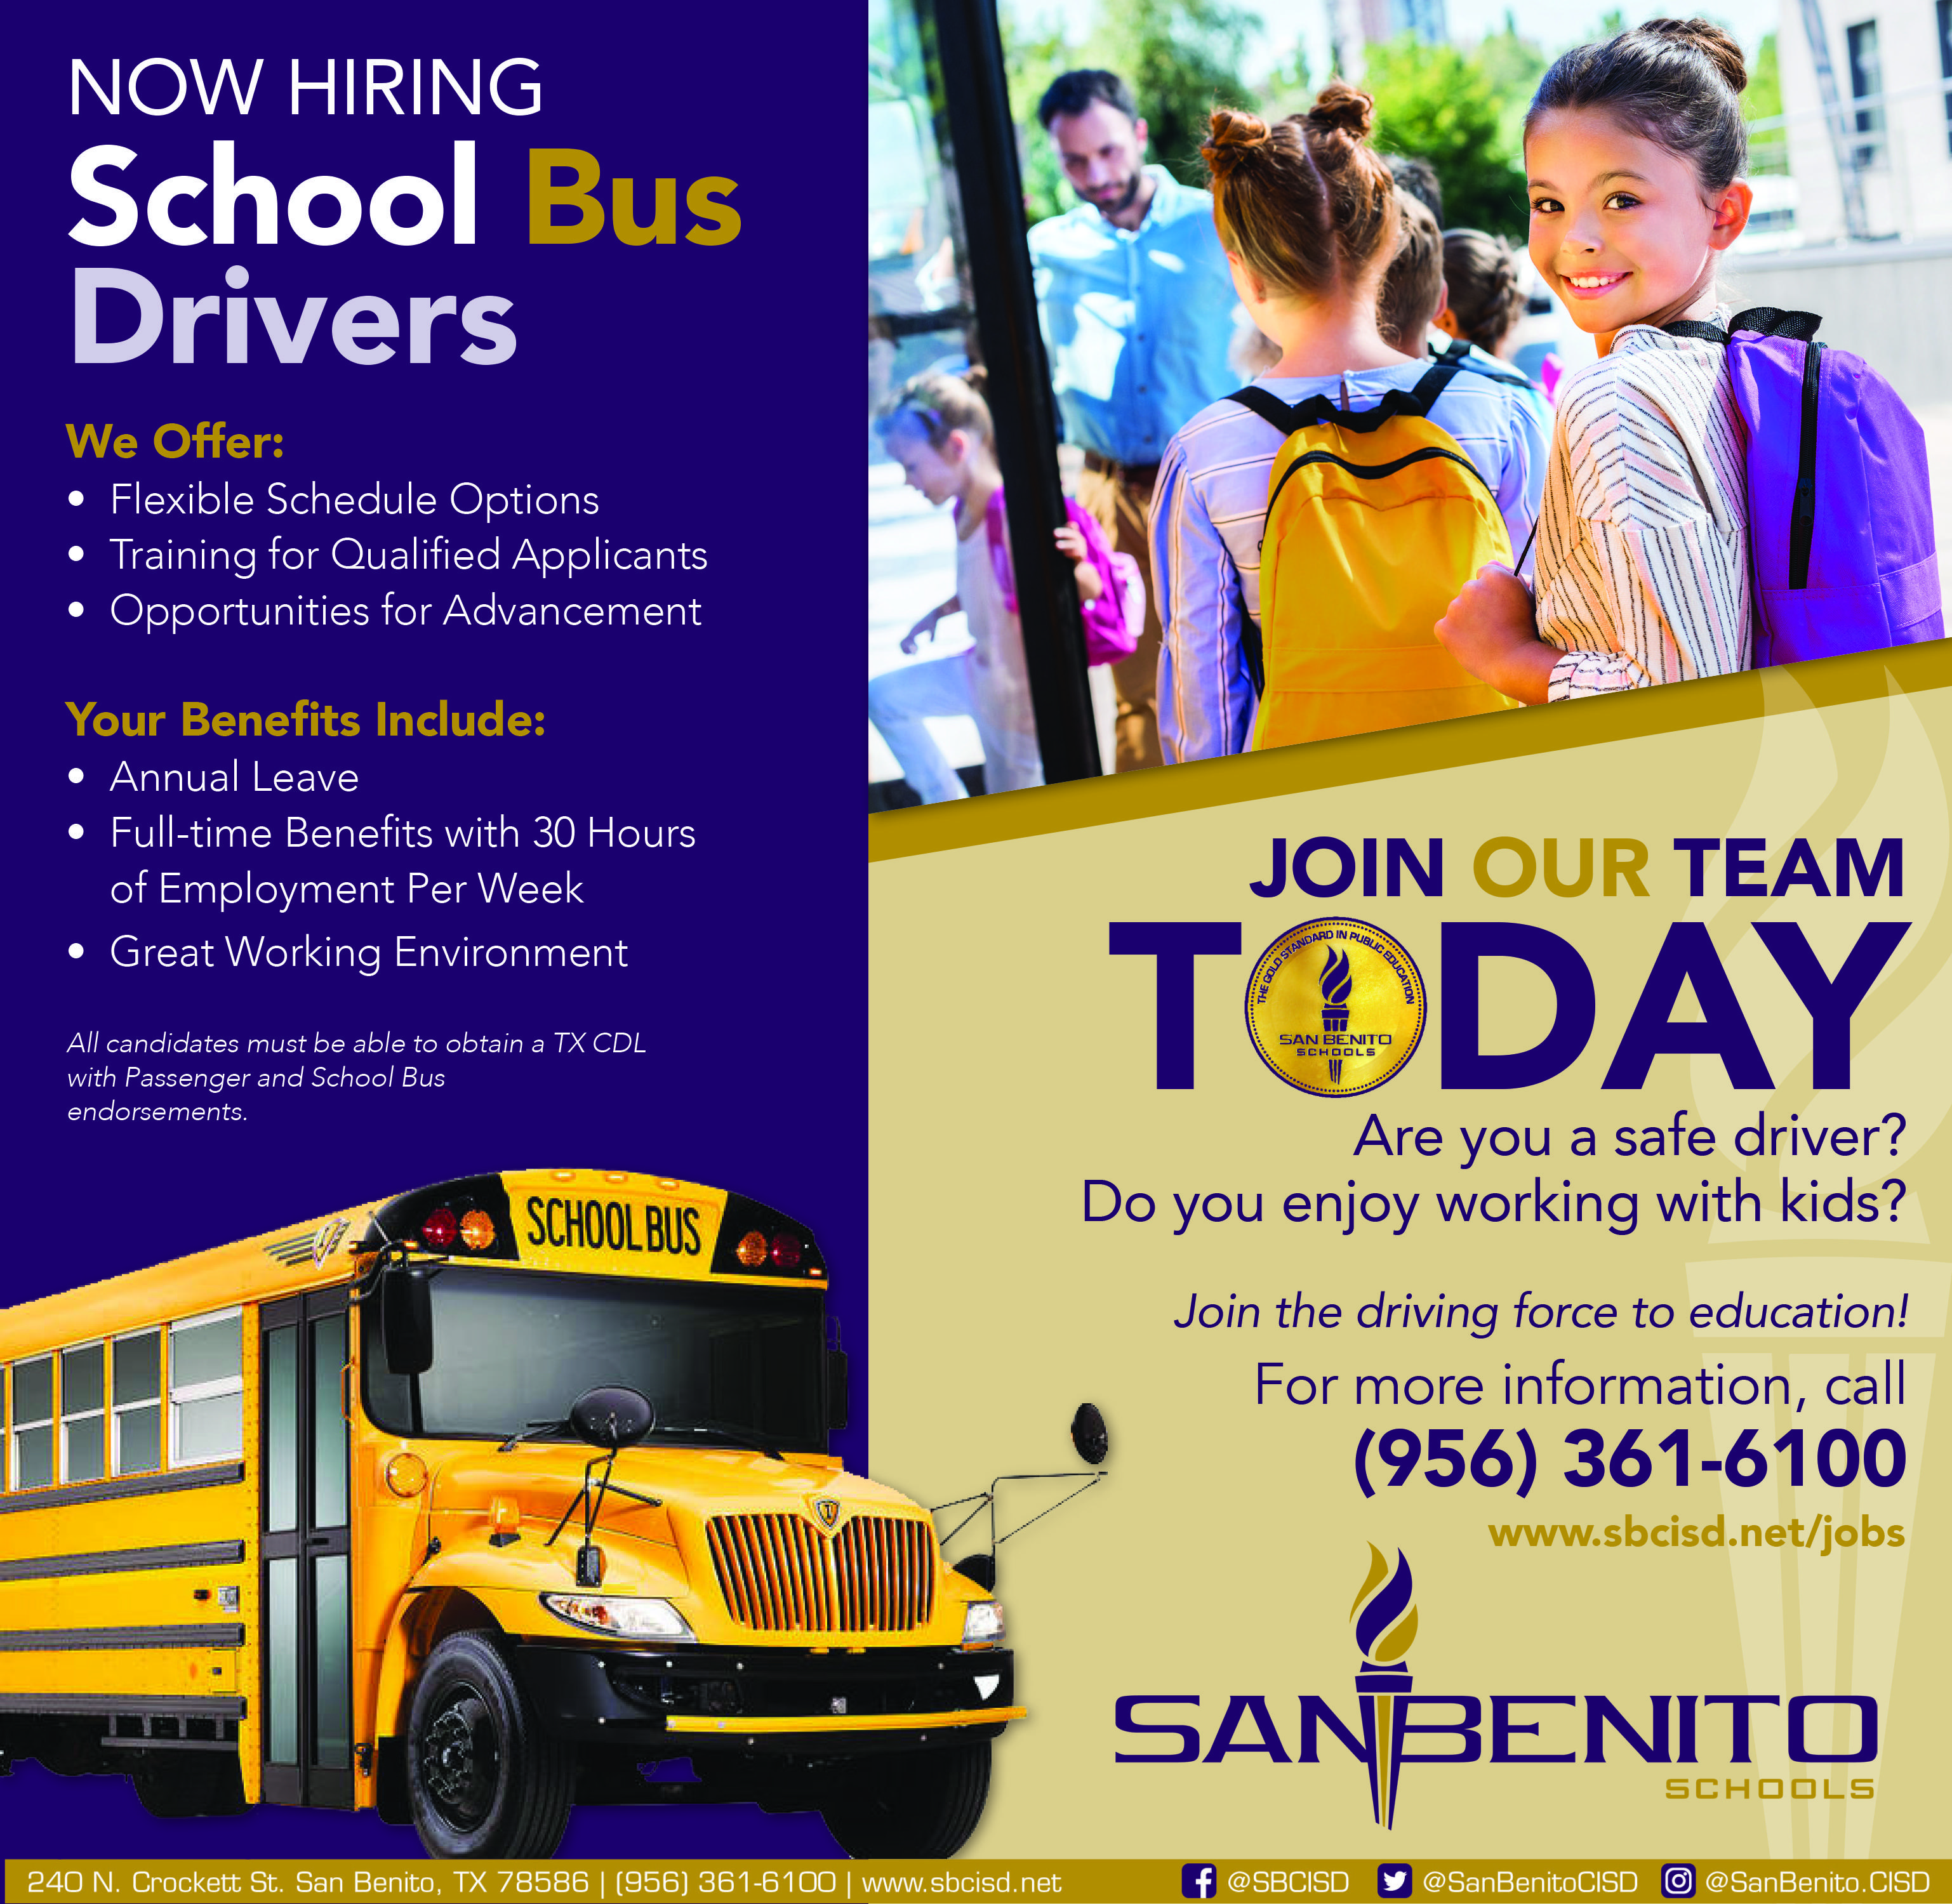 Now Hiring School Bus Drivers